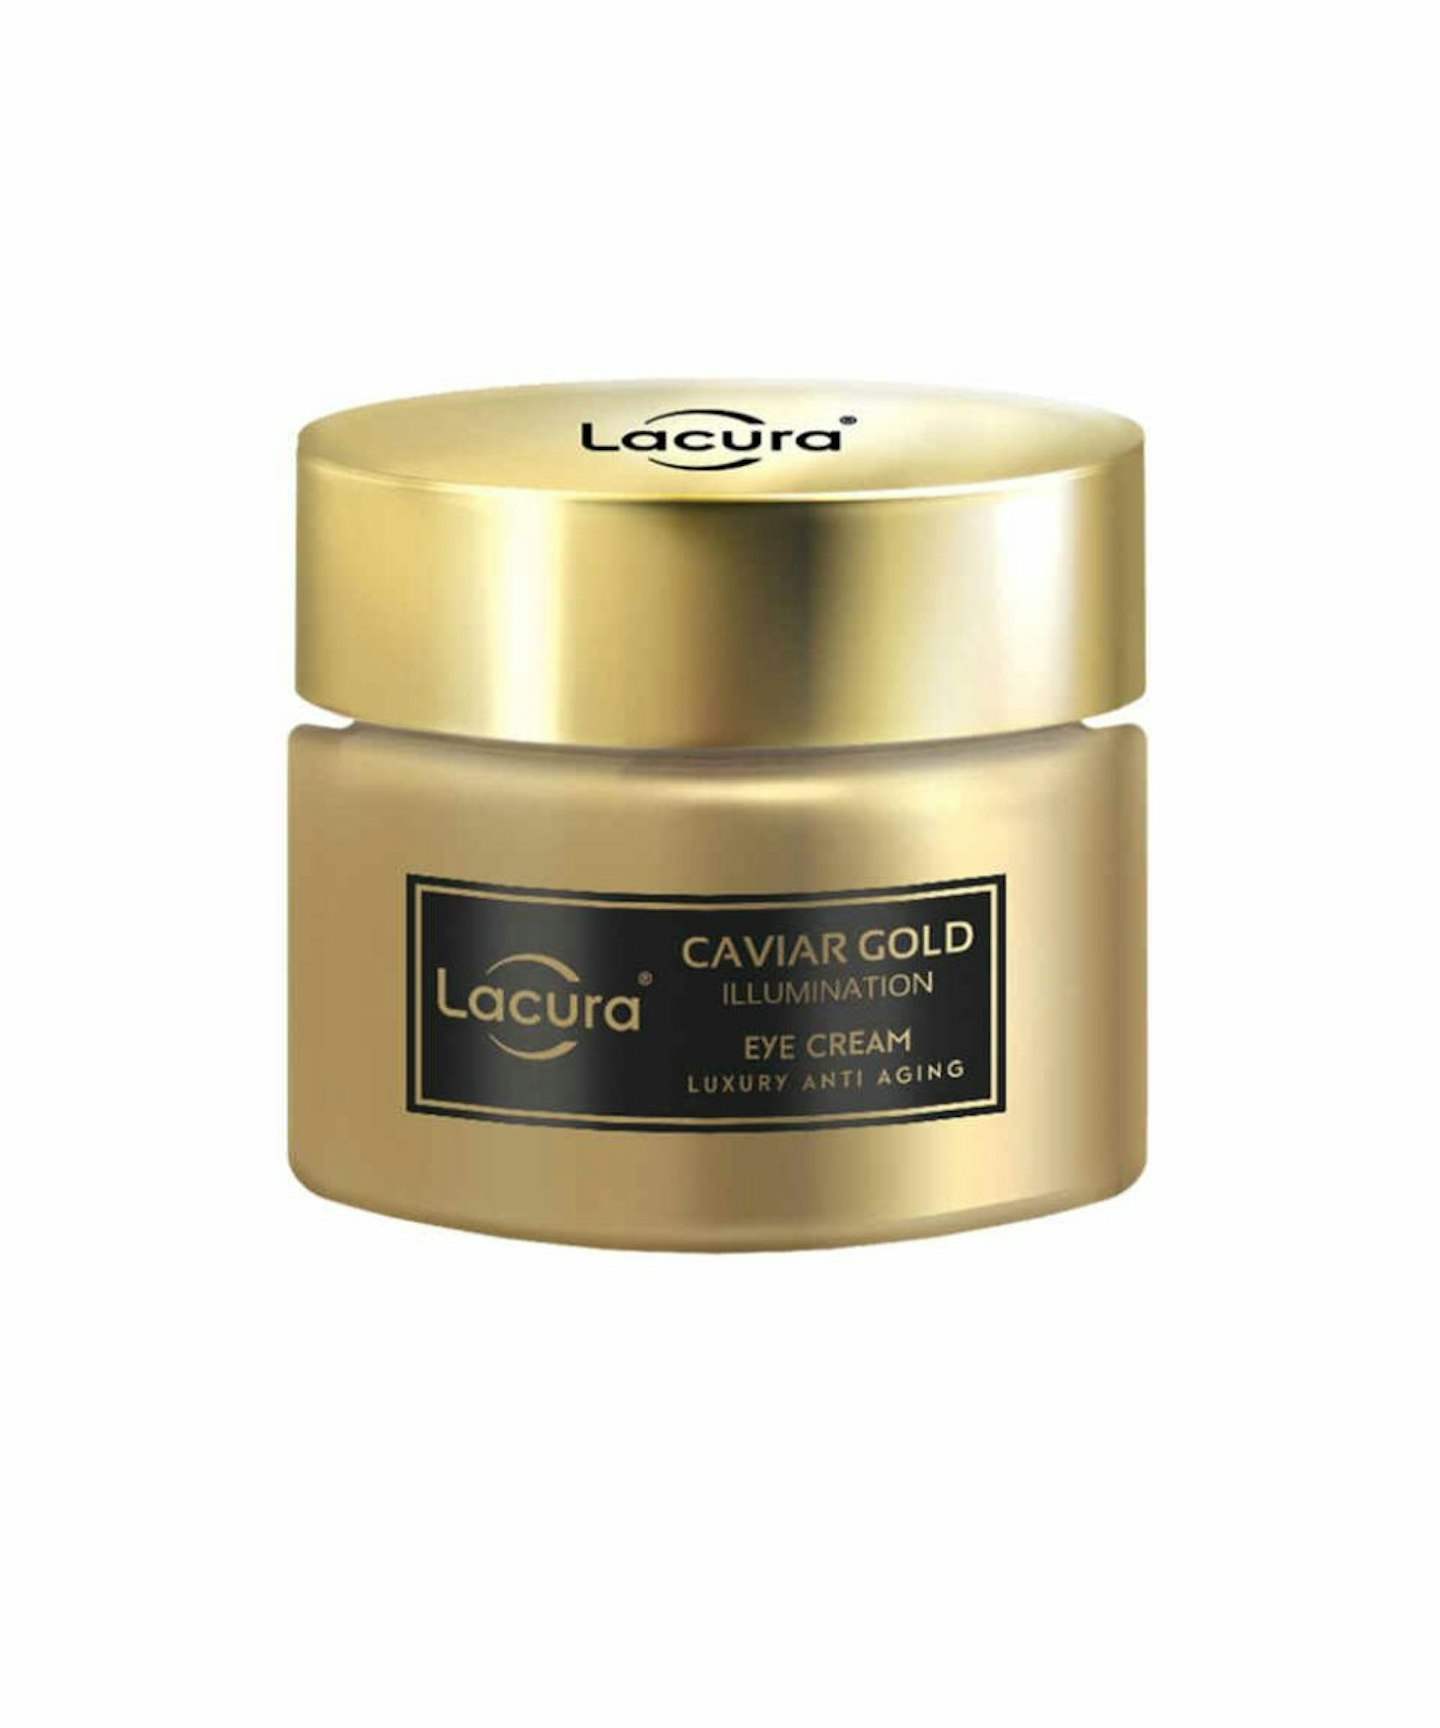 Lacura Caviar Gold Eye Cream